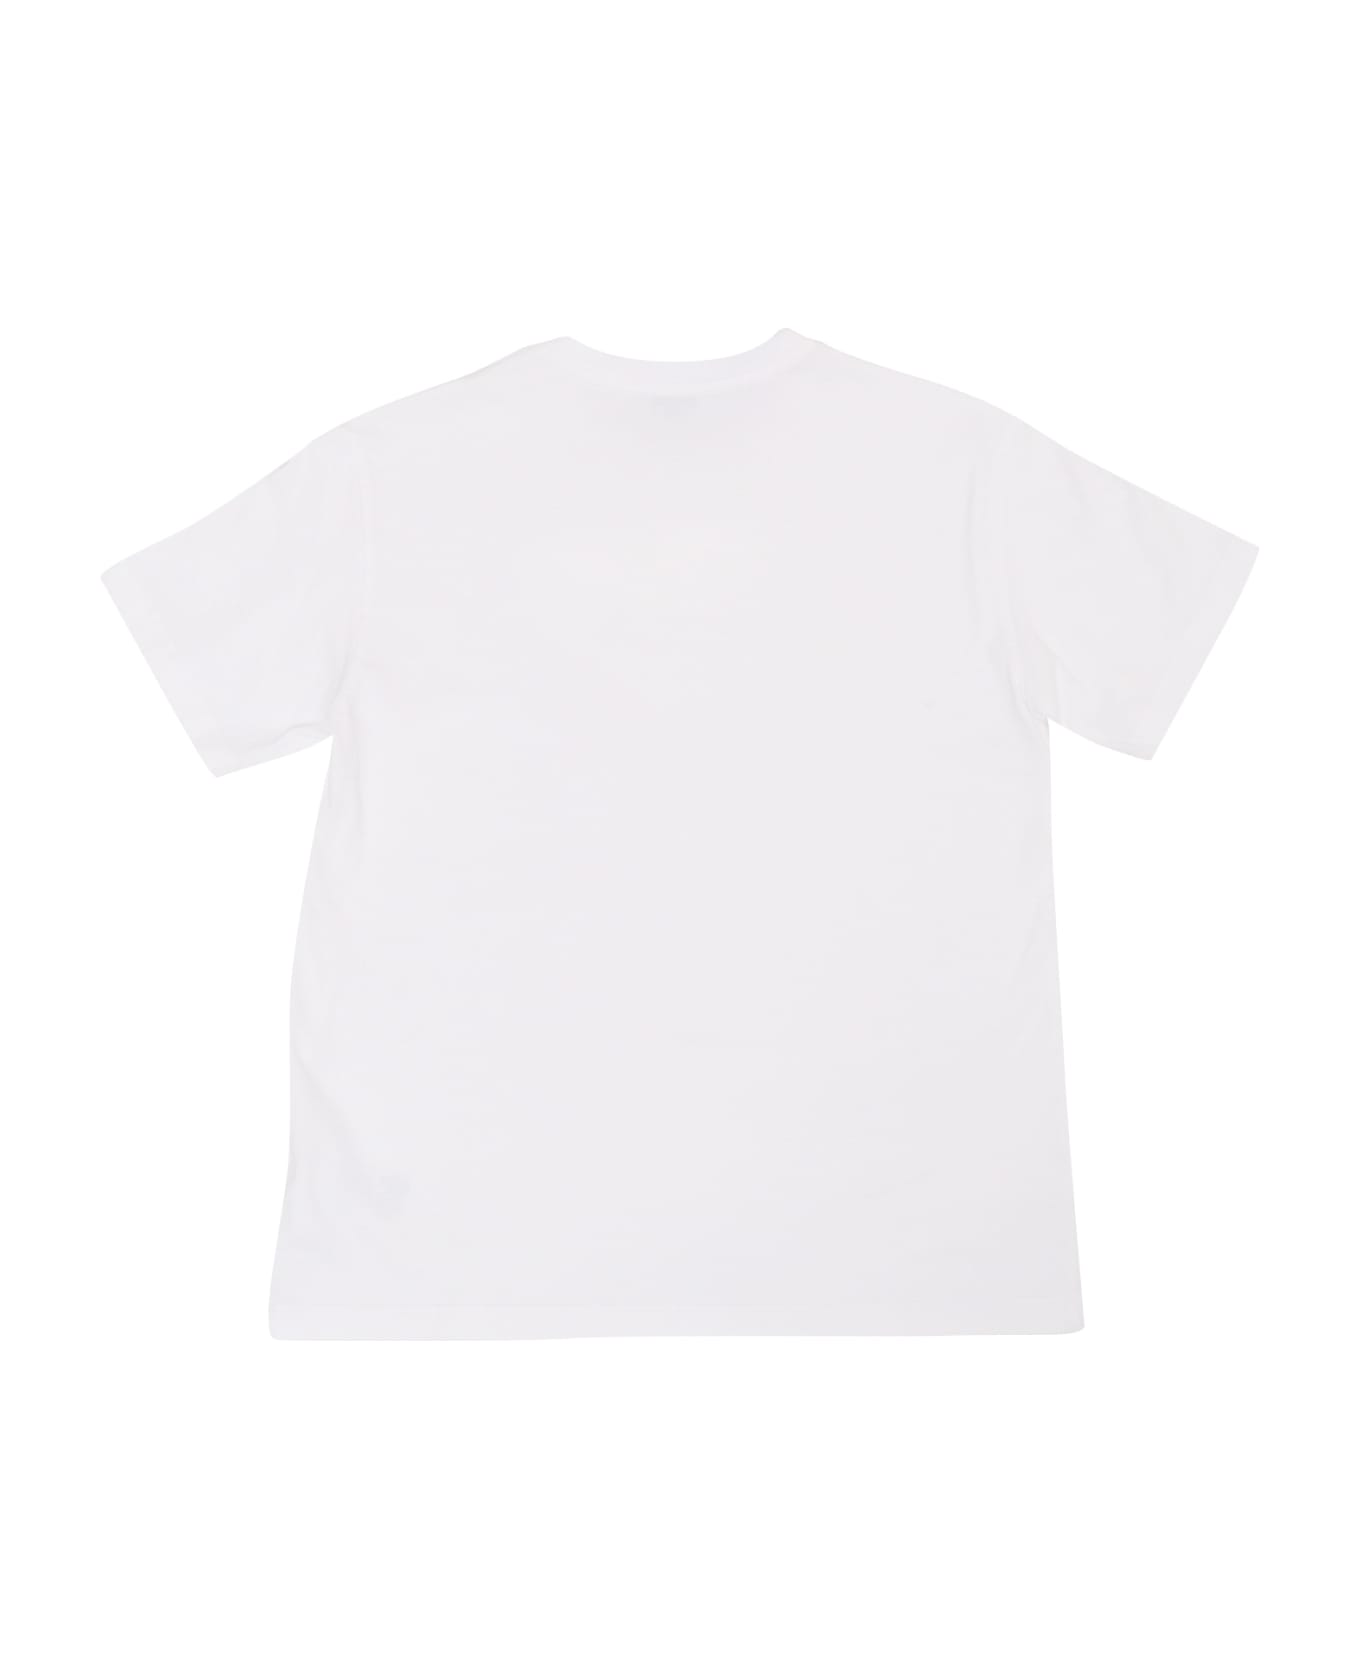 Dolce & Gabbana D&g Children's T-shirt - WHITE